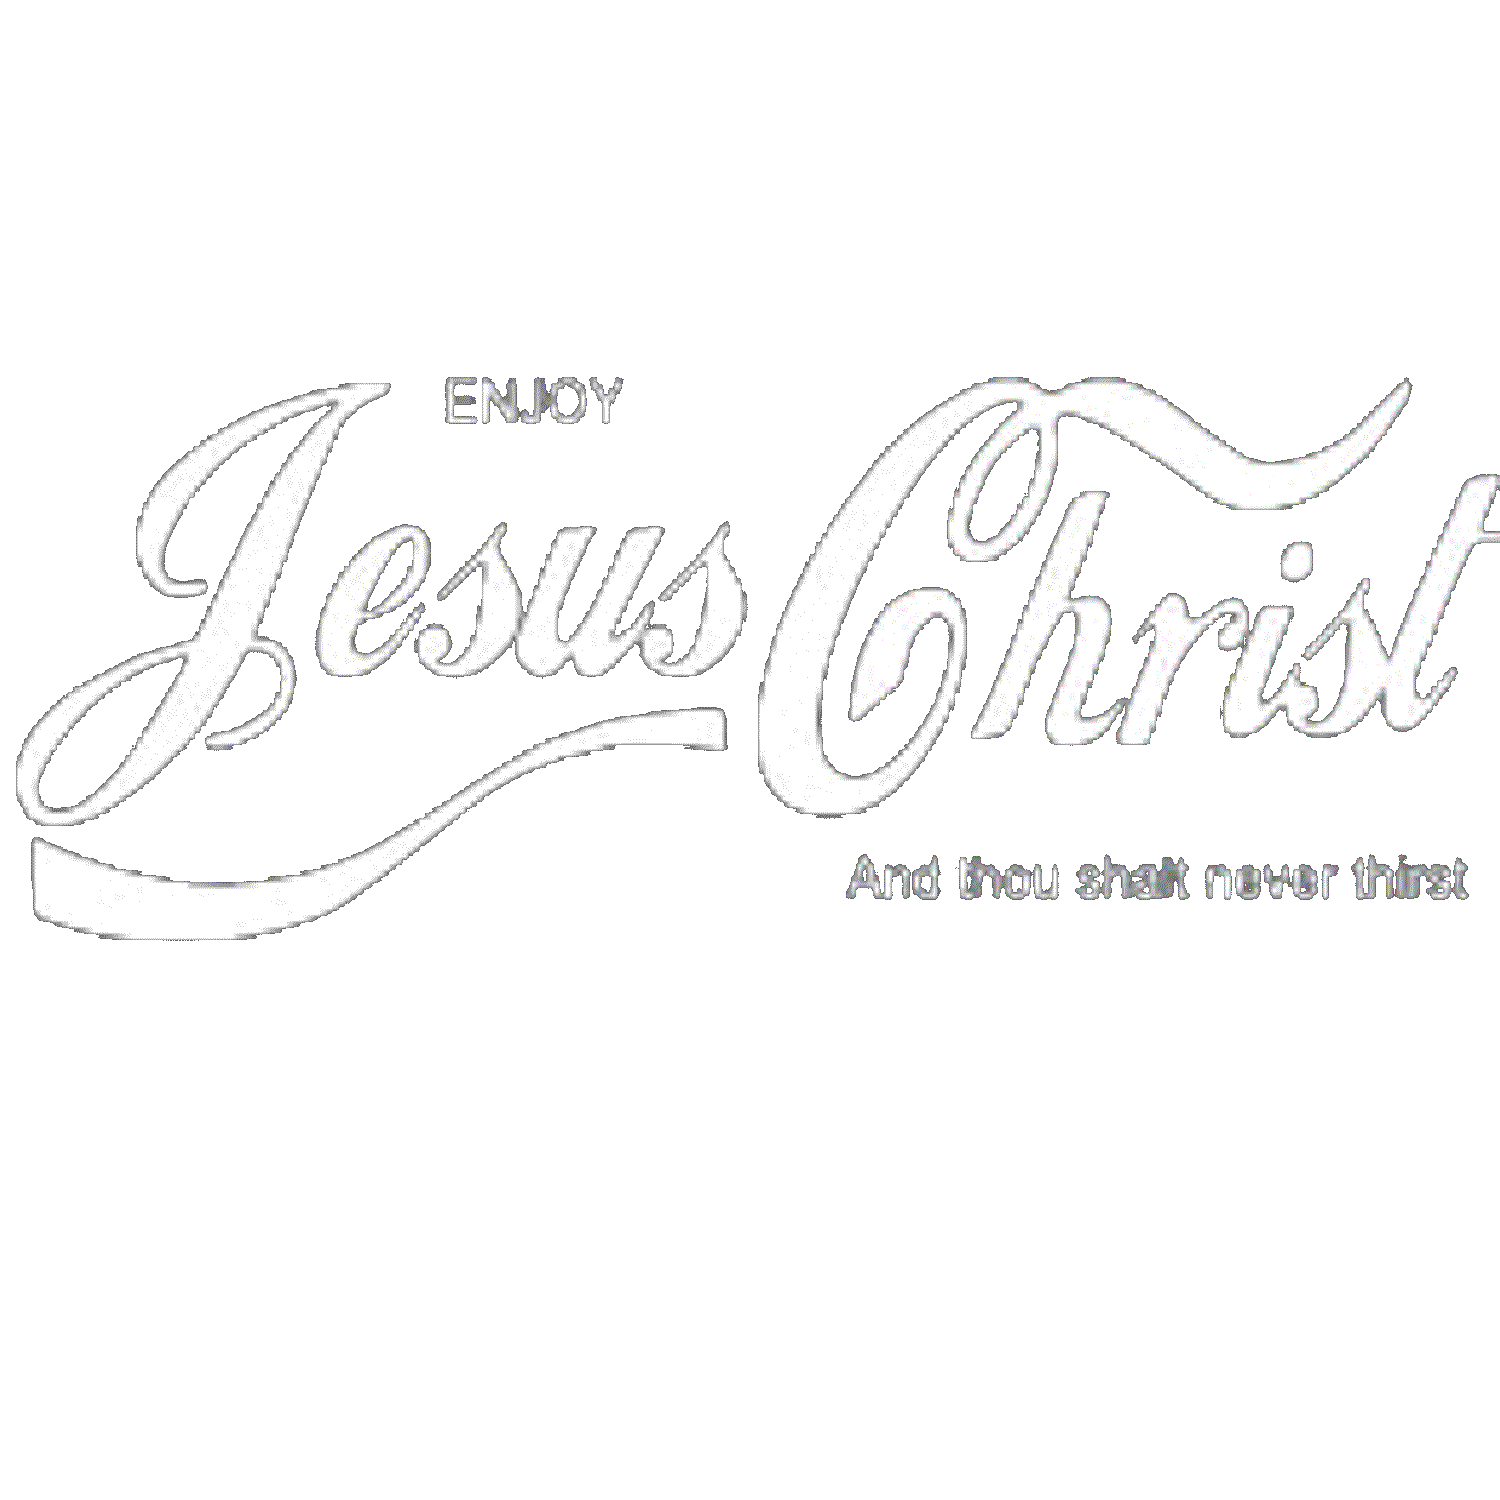 Enjoy Jesus Christ